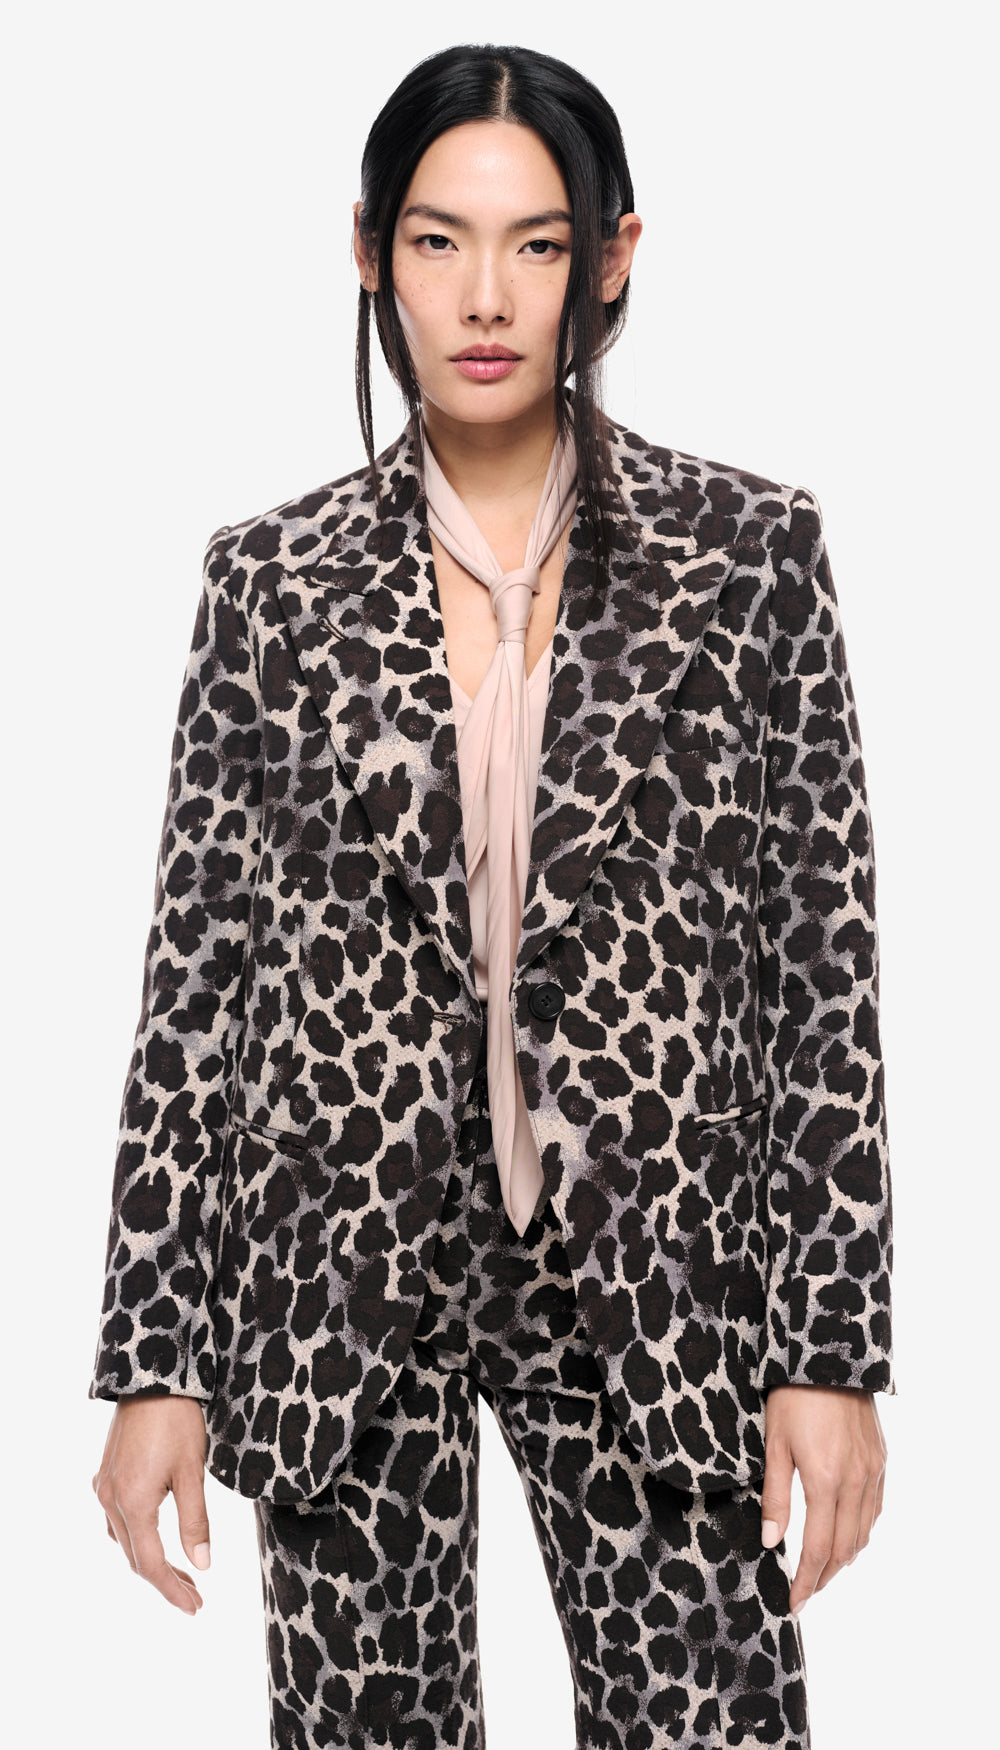 A woman in a leopard print blazer.